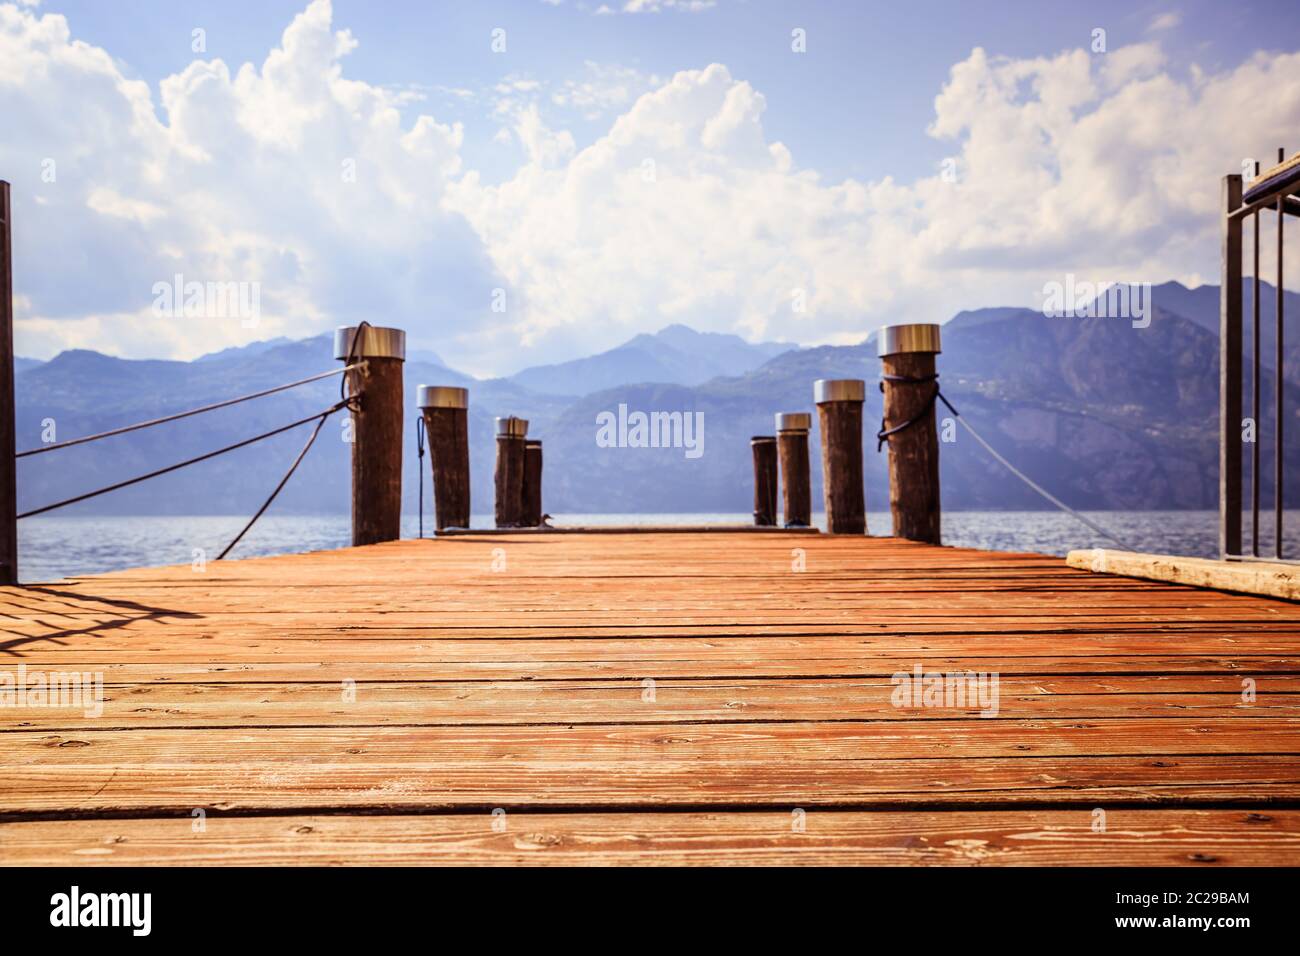 Wooden dock pier extending over blue lake water, mountains at lago di garda Stock Photo